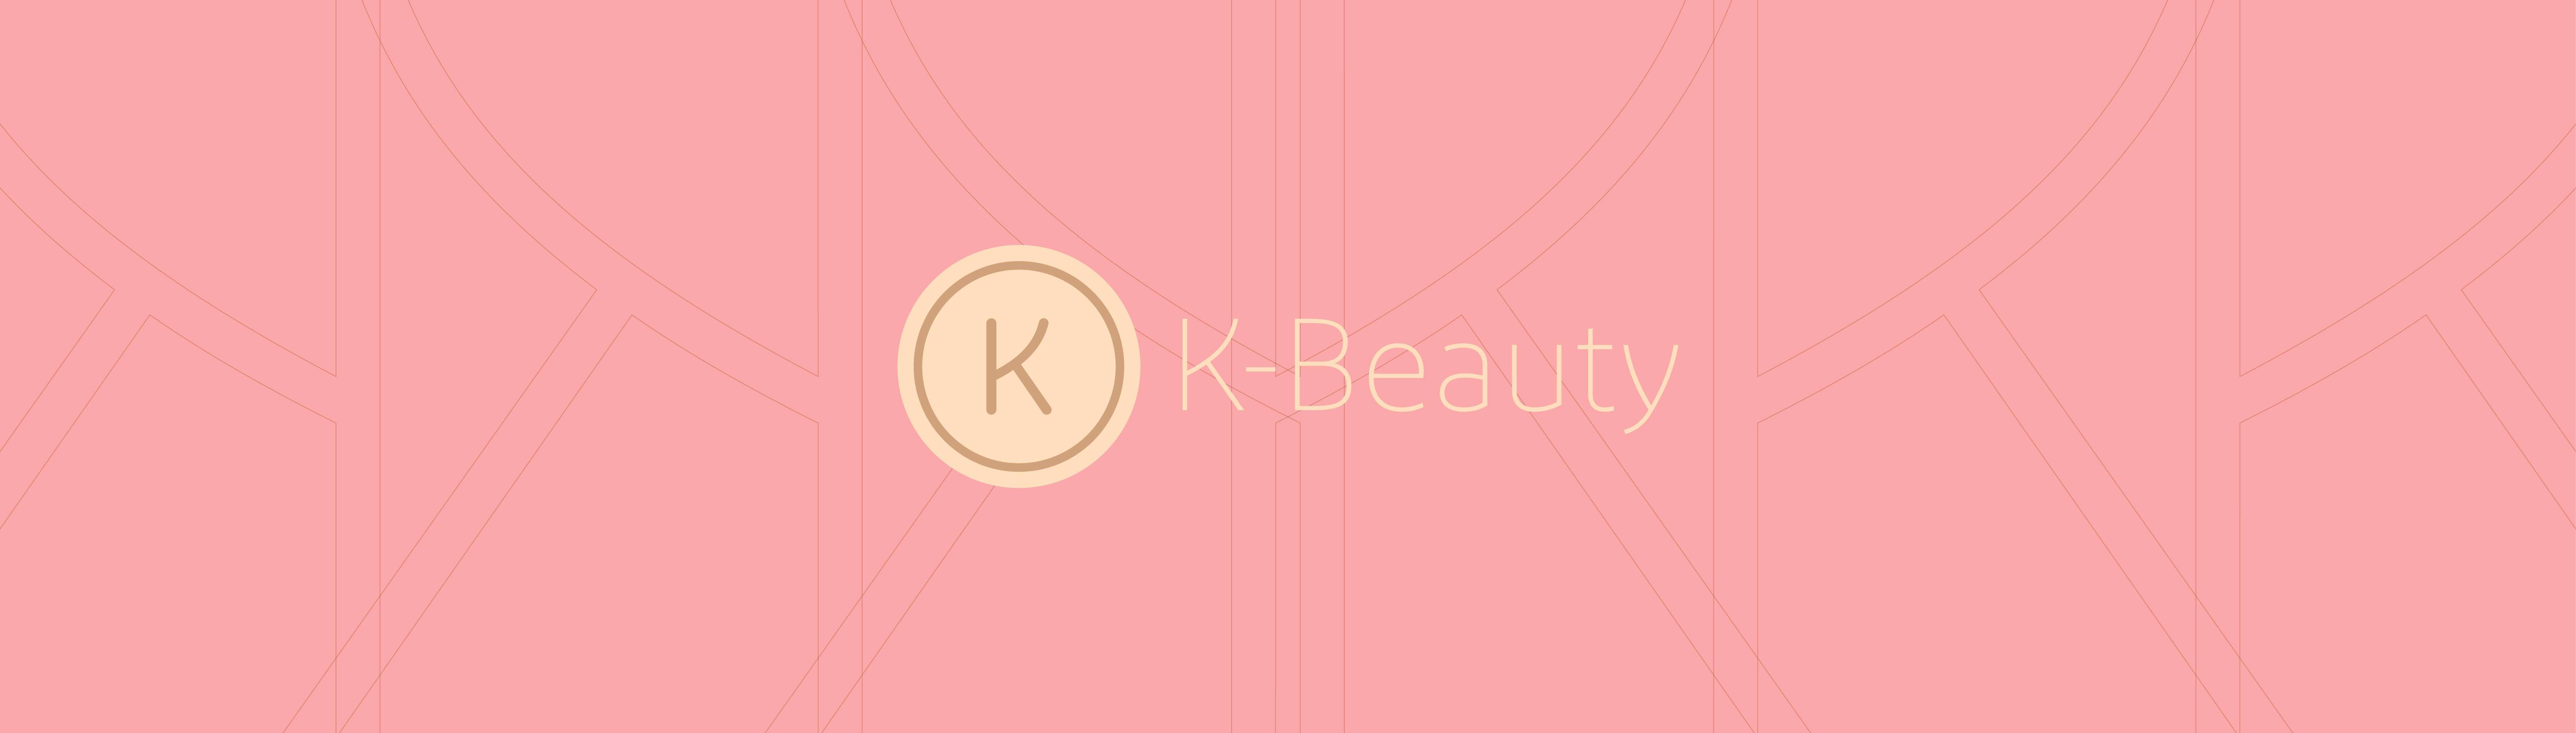 k-beauty